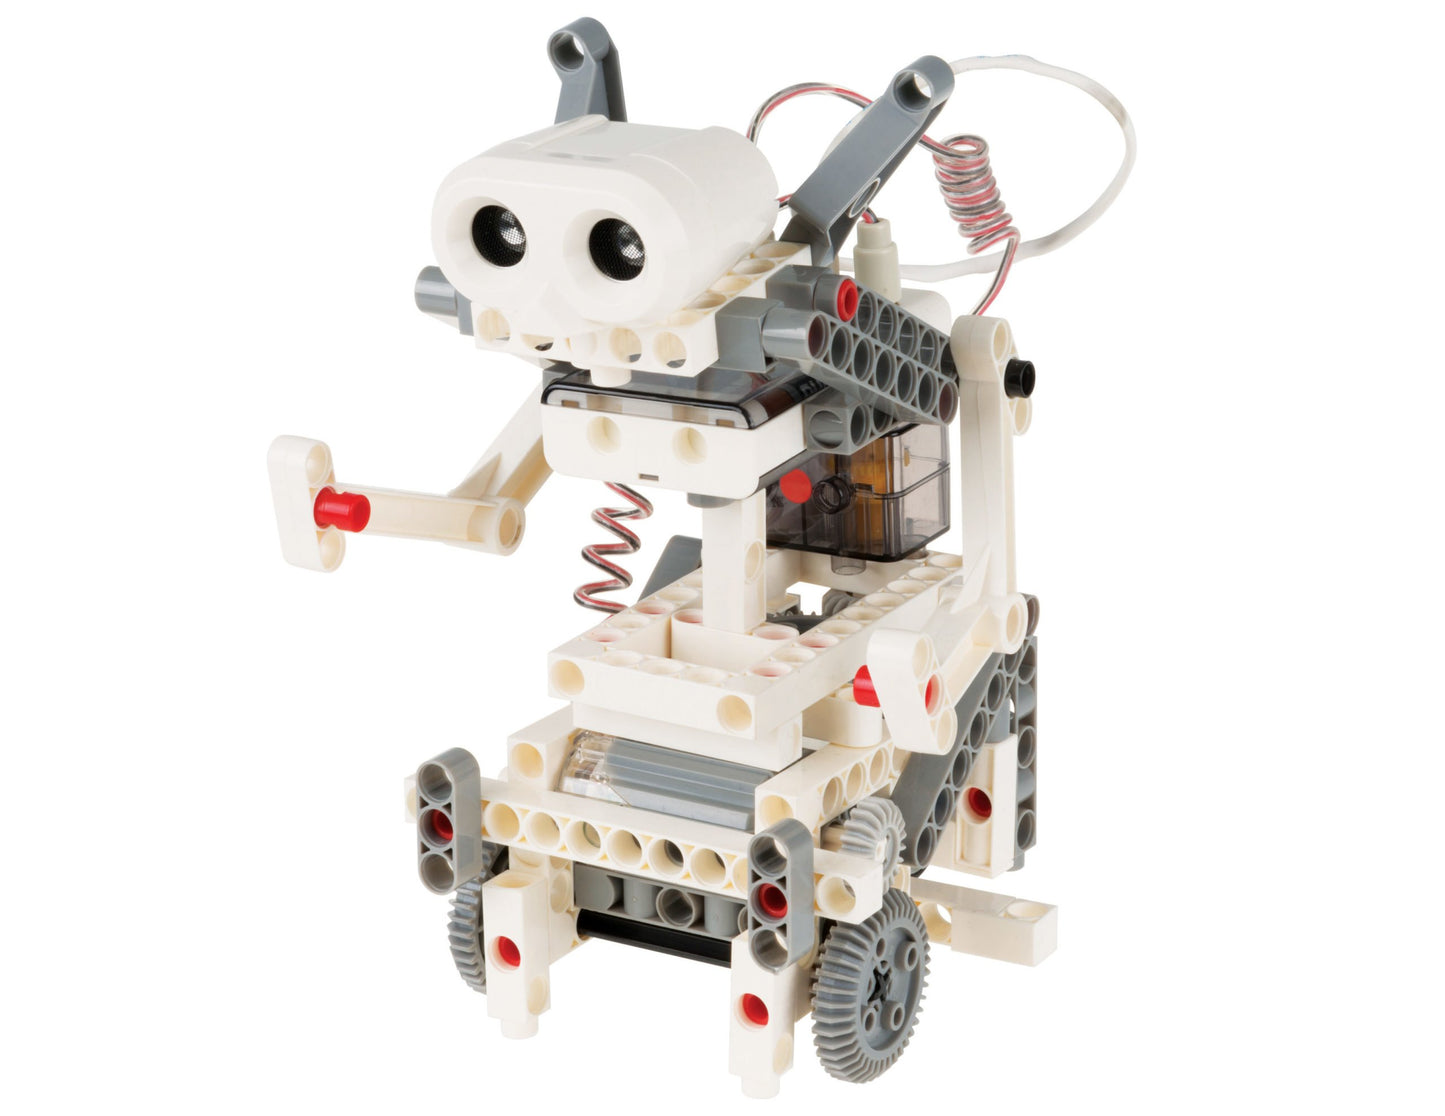 Thames & Kosmos Robotics Smart Machines